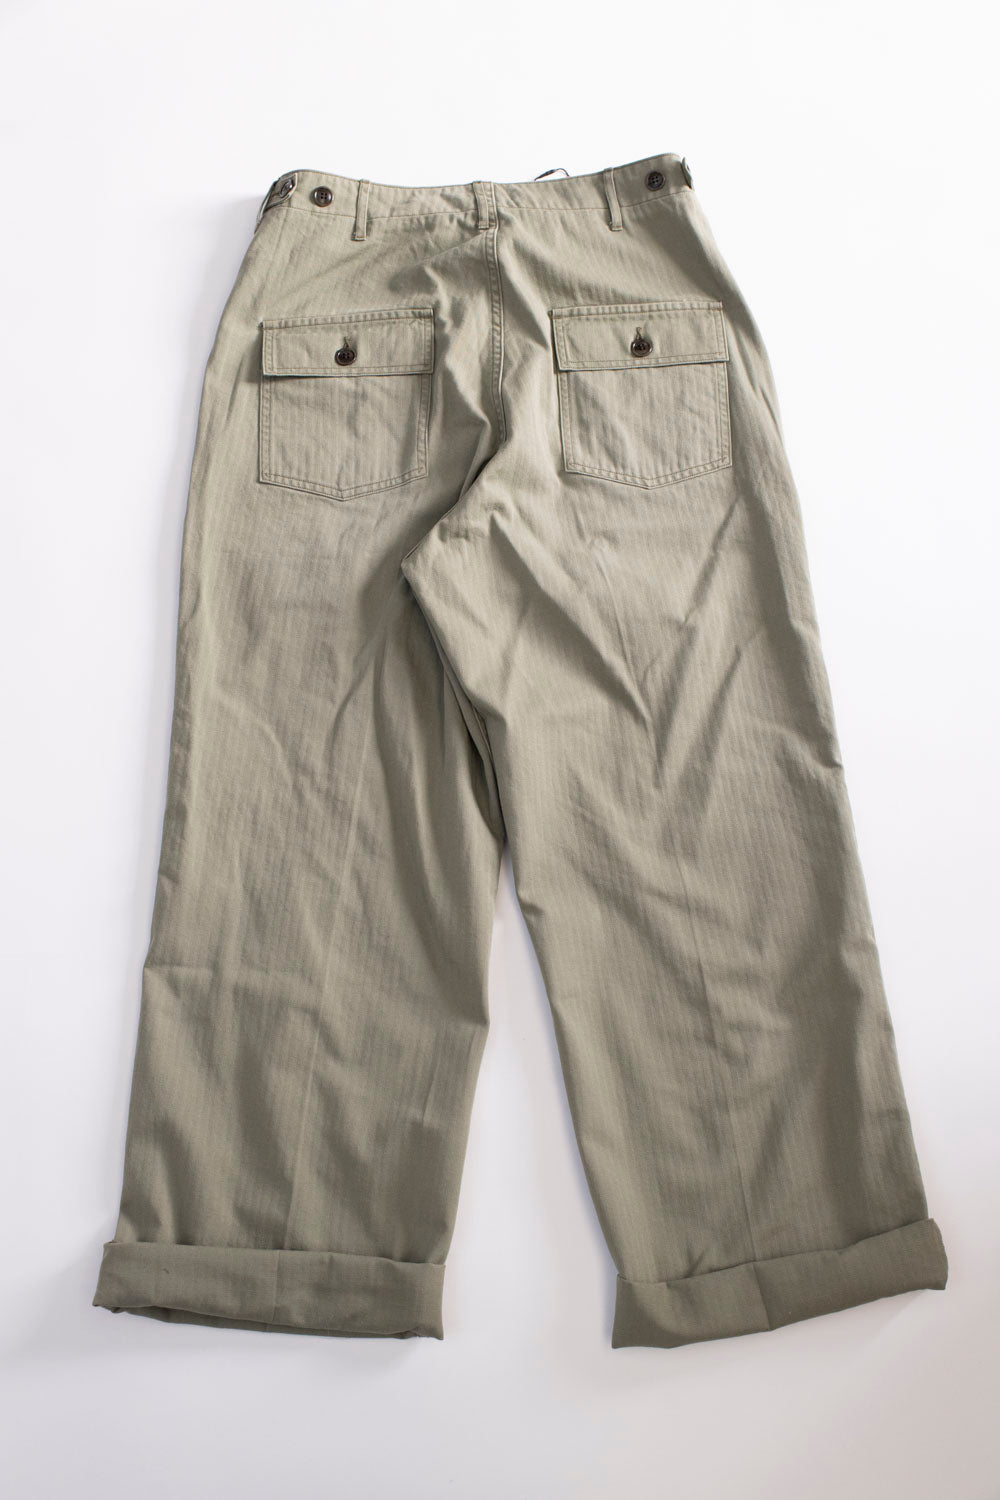 MSP-1014 - Tsugihagi Baker Pants - Army Green